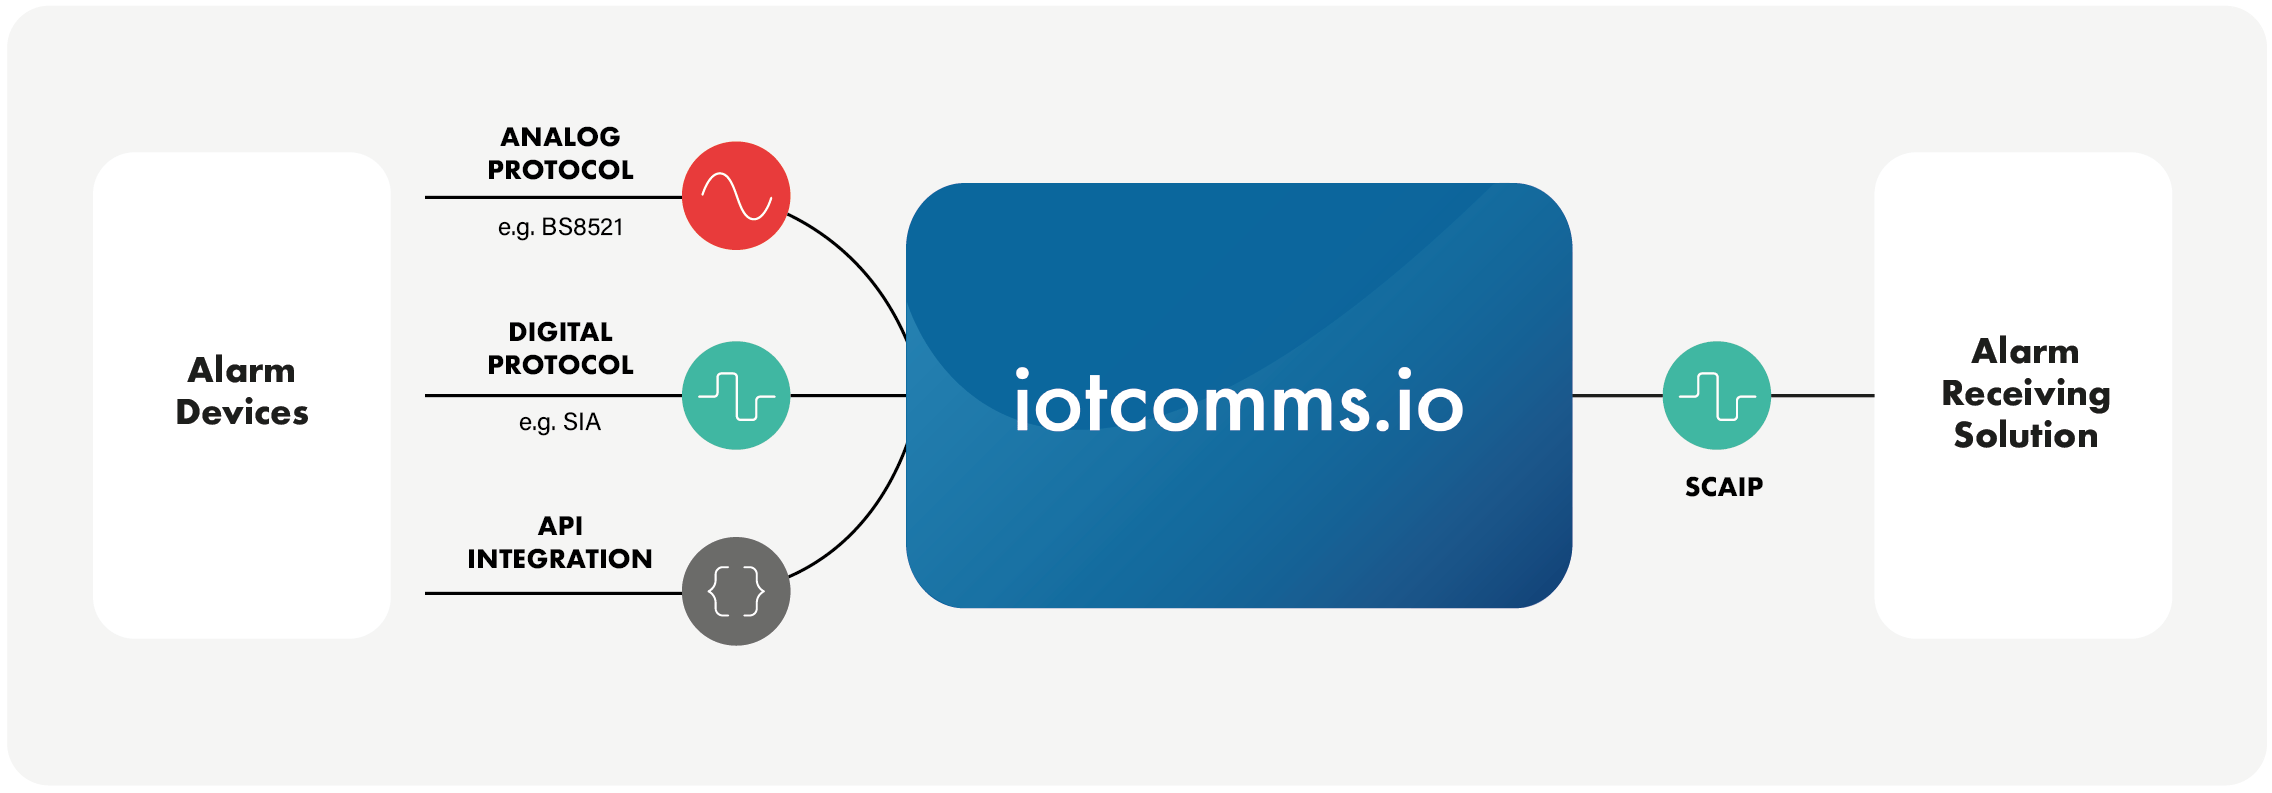 Make your alarm device SCAIP compliant ​with iotcomms.io